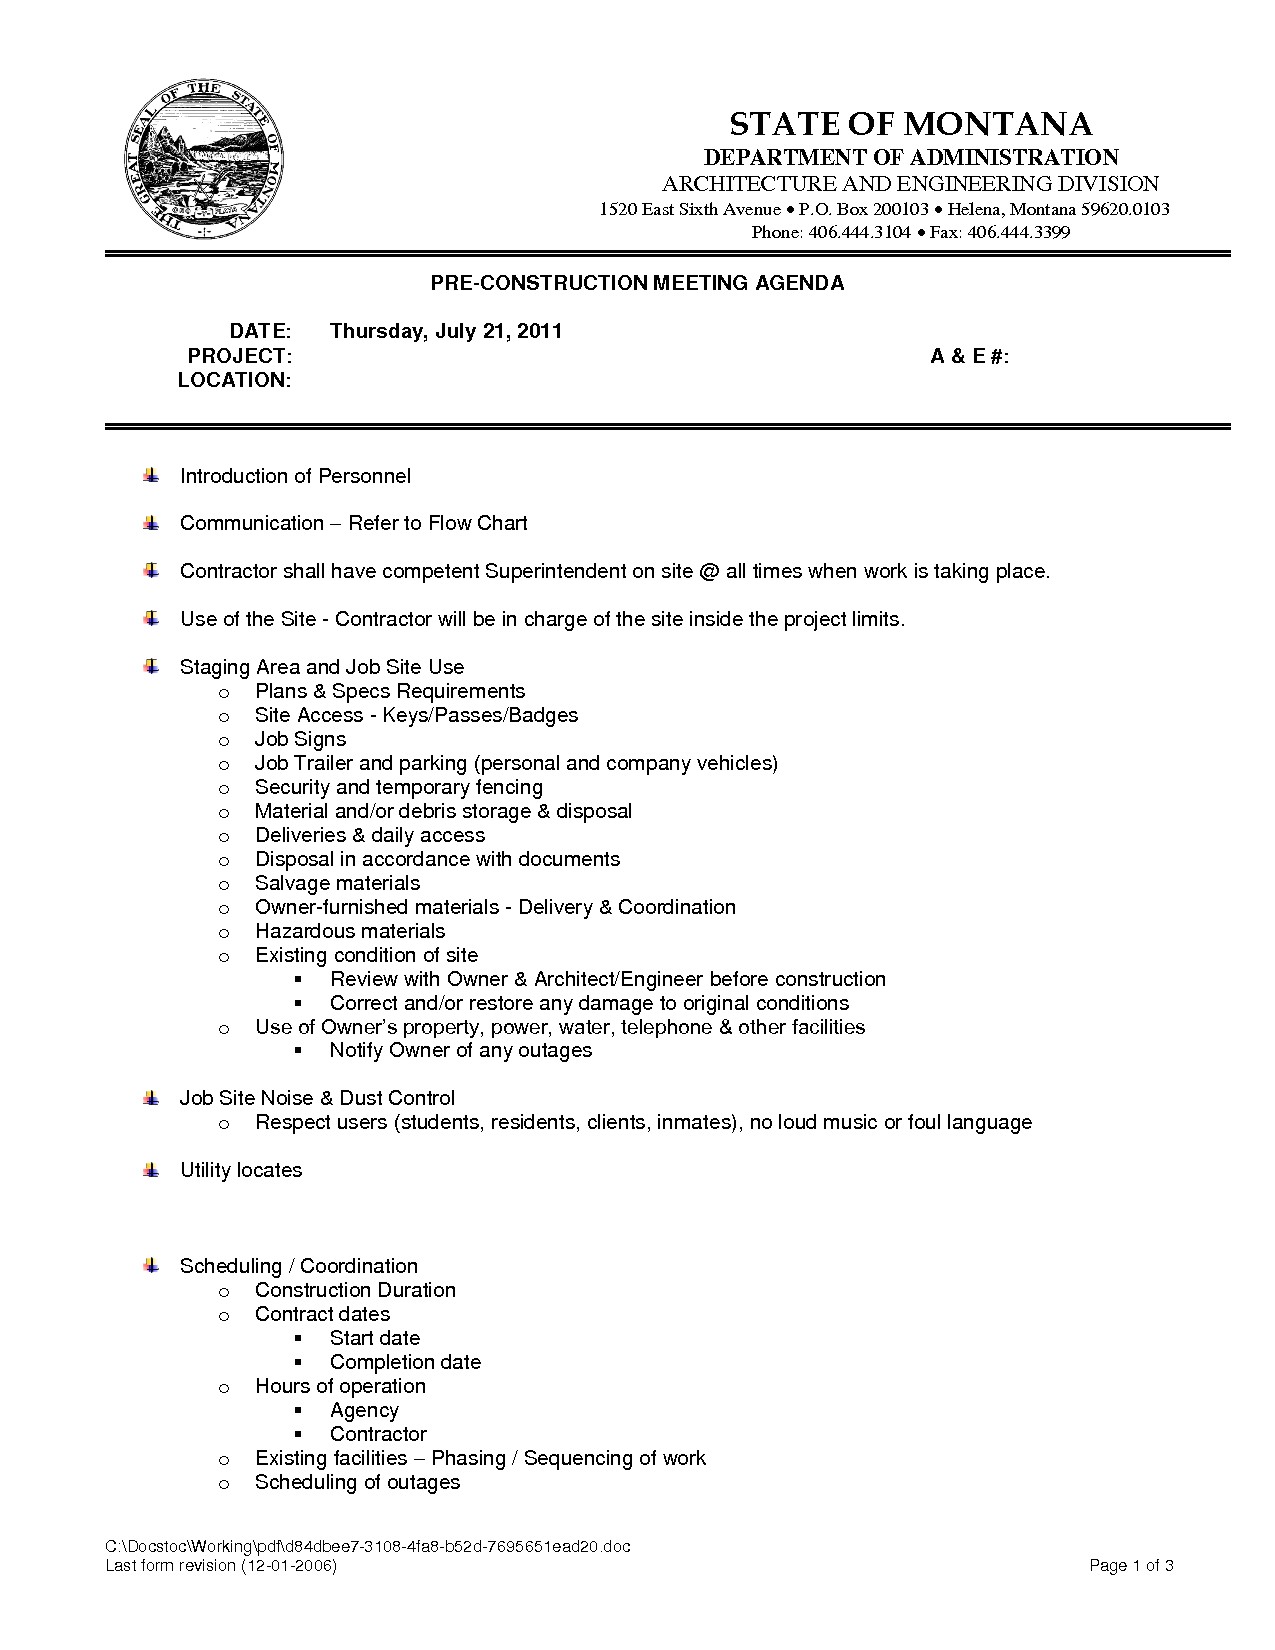 post job proposal template 29124